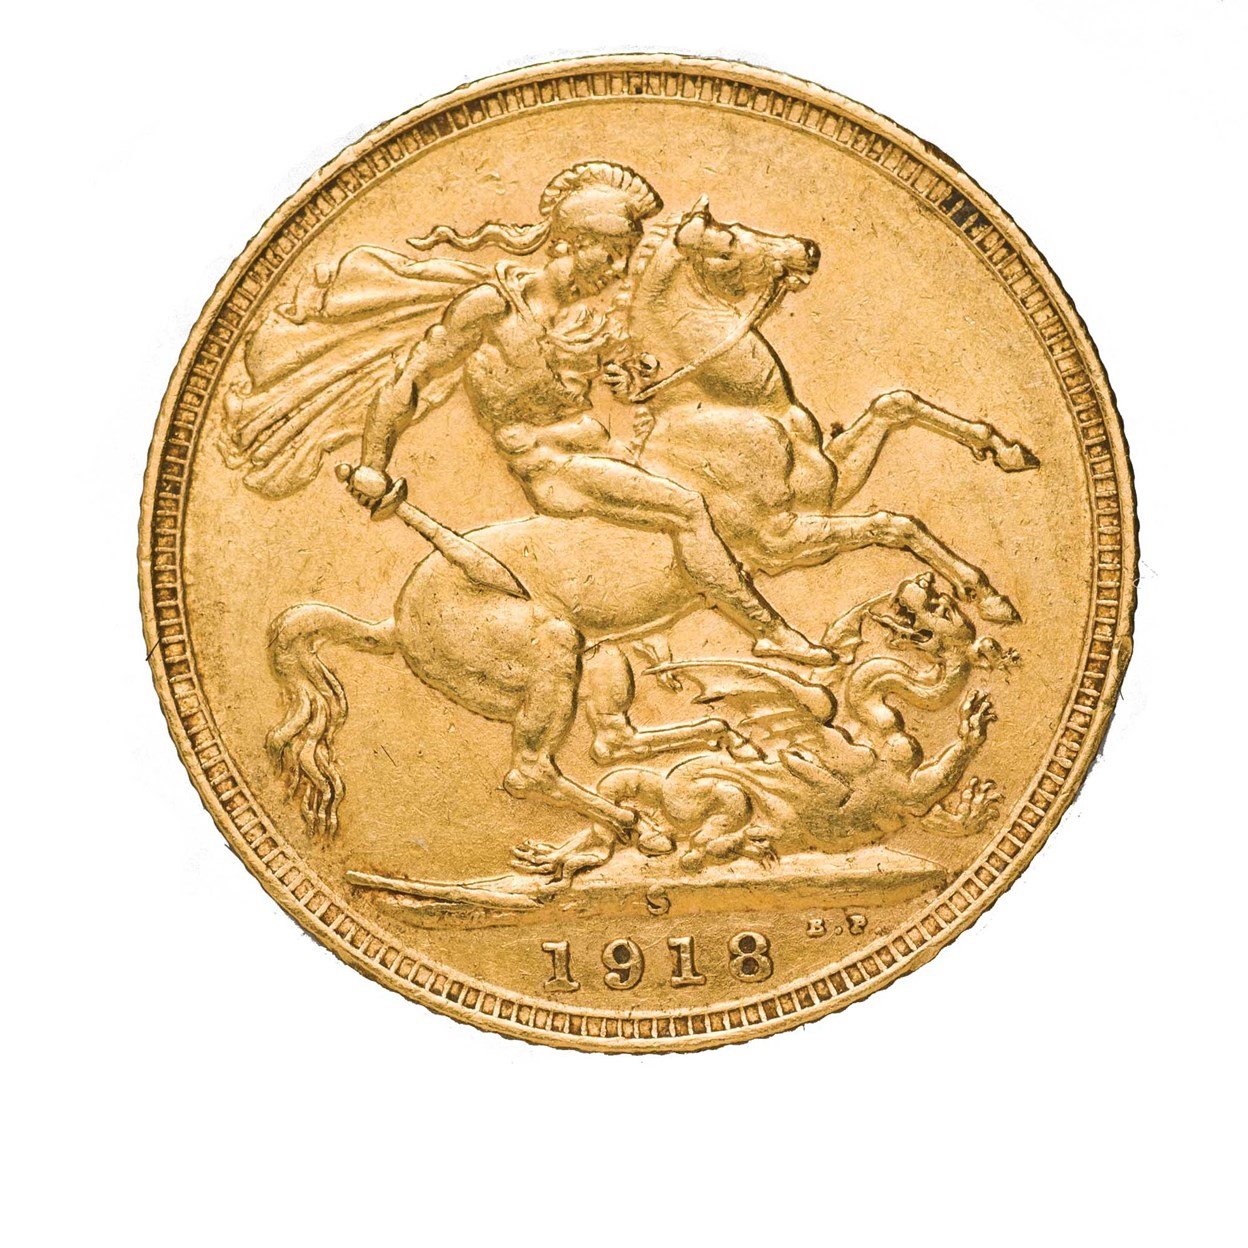 01 1918 king george v perth mint gold sovereign 2017 gold StraightOn